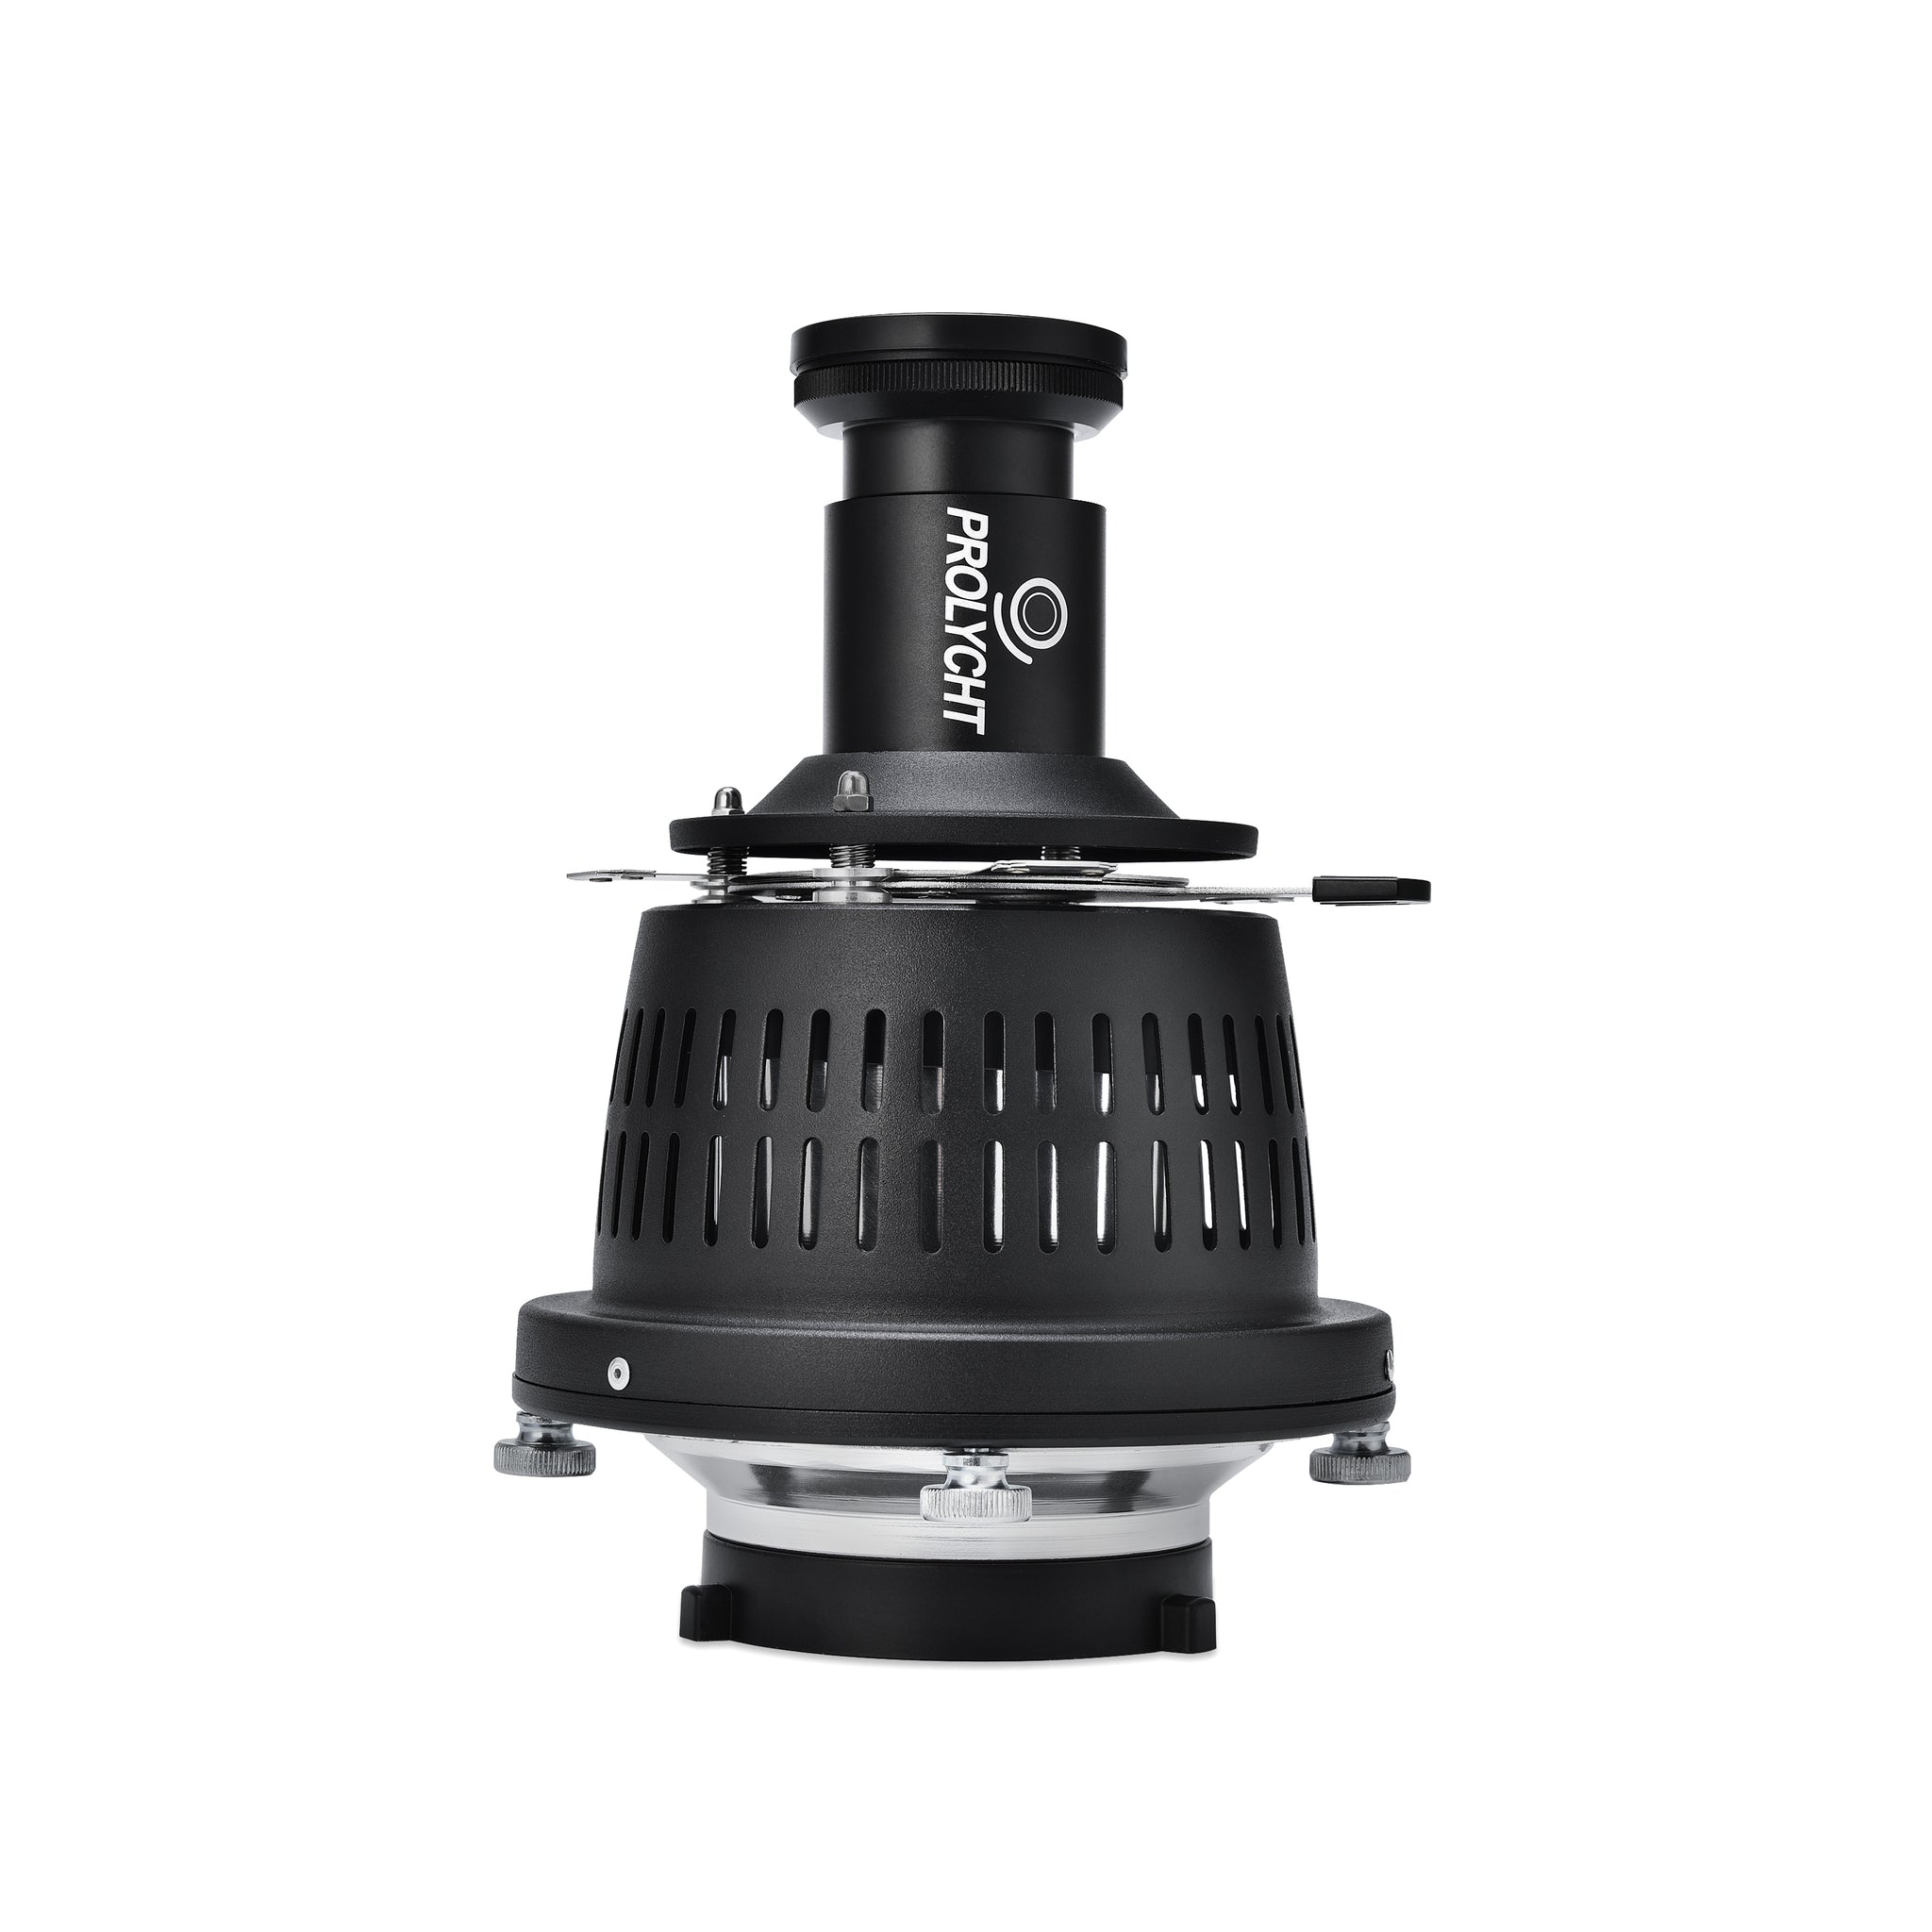 Orion 300 FS Projection Lens Kit